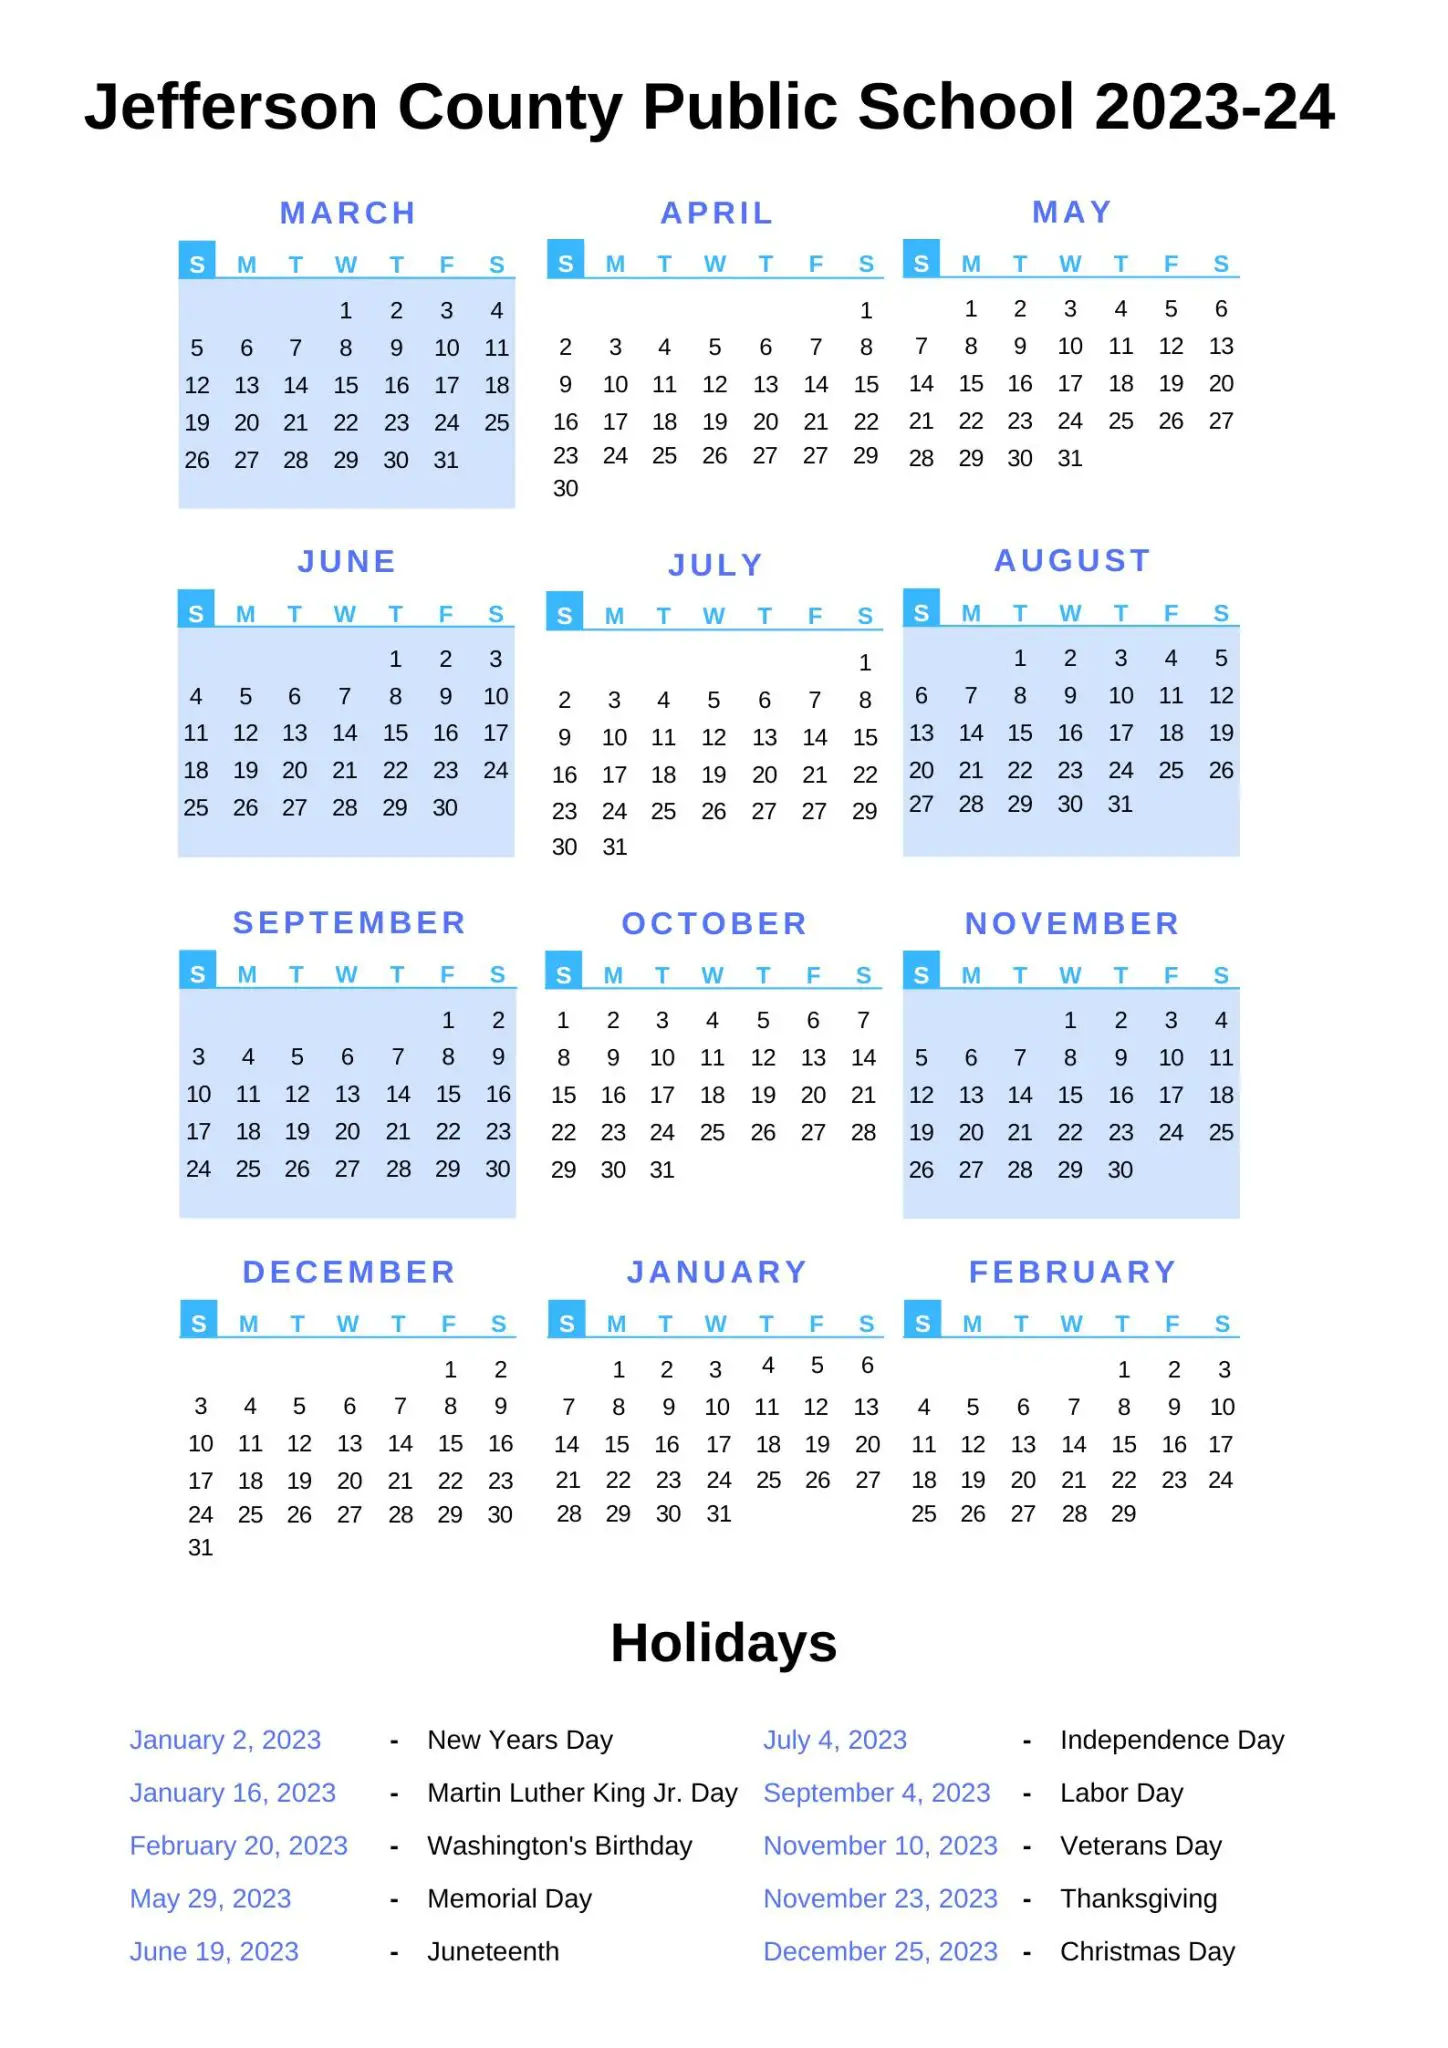 jefferson-county-public-schools-calendar-2023-24-with-holidays